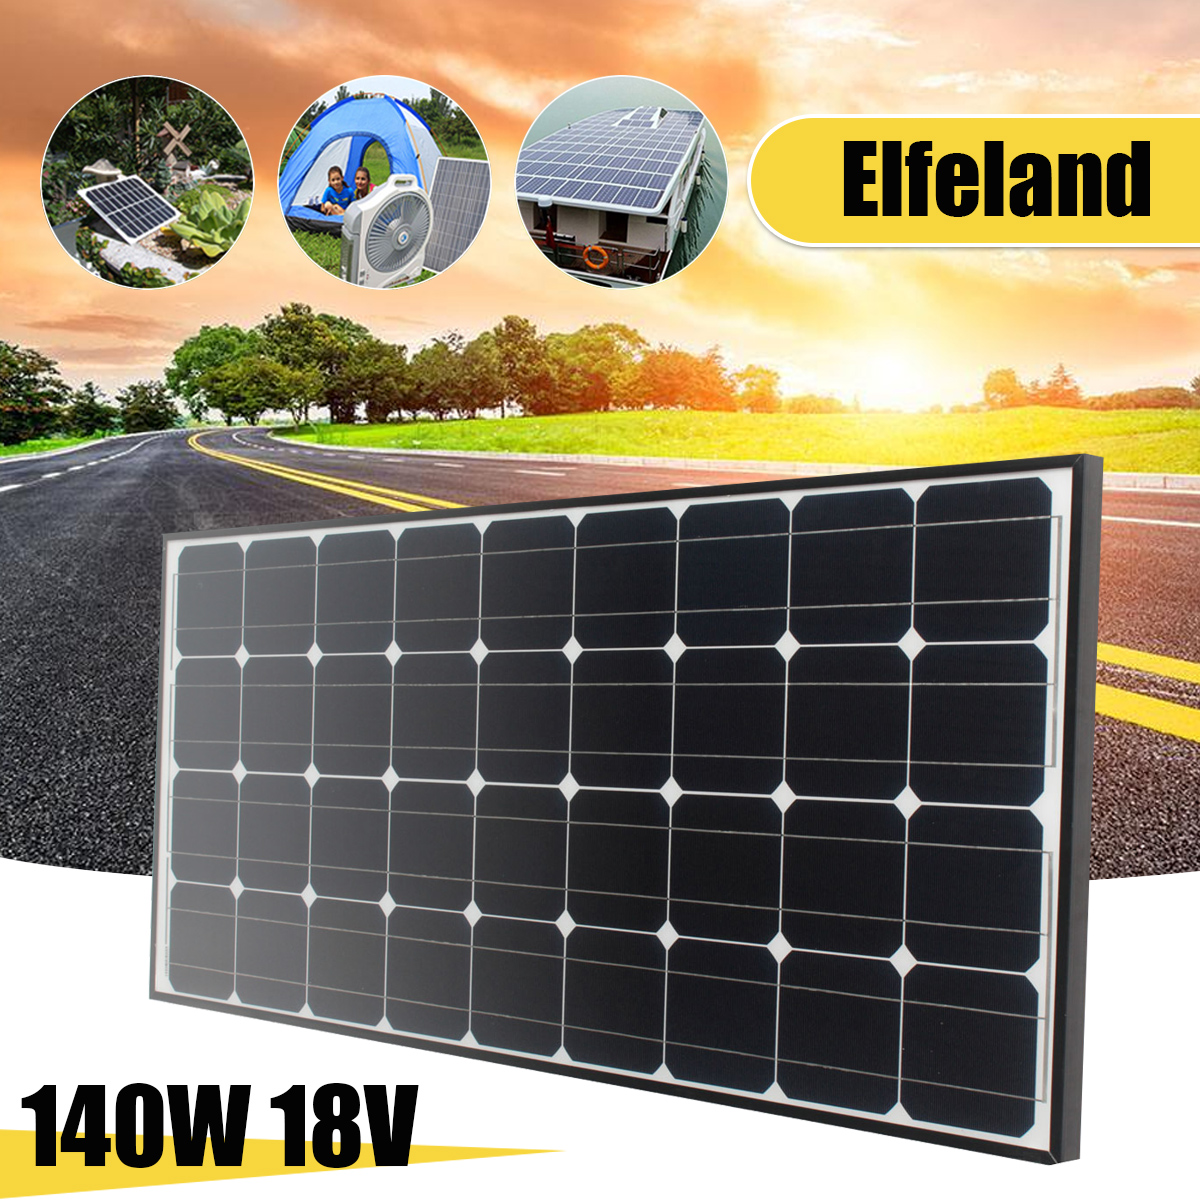 Elfeland-M-140-140W-18V-Mono-Solar-Panel-Battery-Charger-For-Boat-Caravan-Motorhome-1292680-2